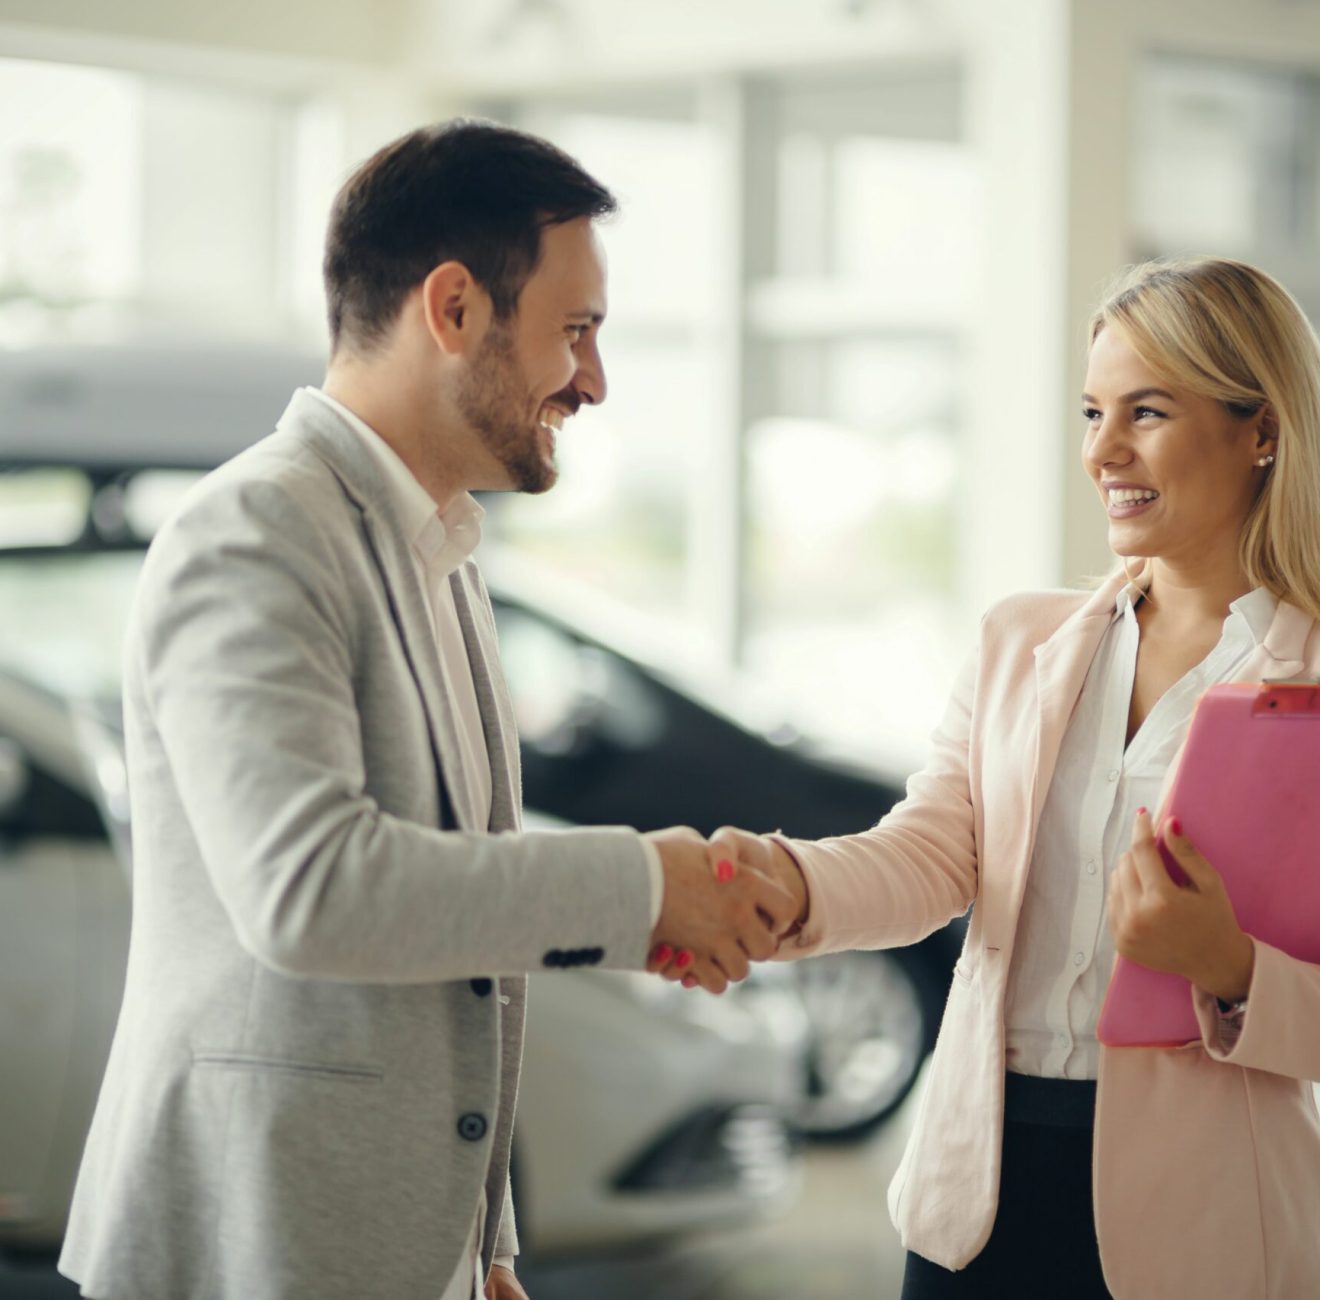 salesperson-workin-at-car-dealership-2021-08-26-17-31-11-utc